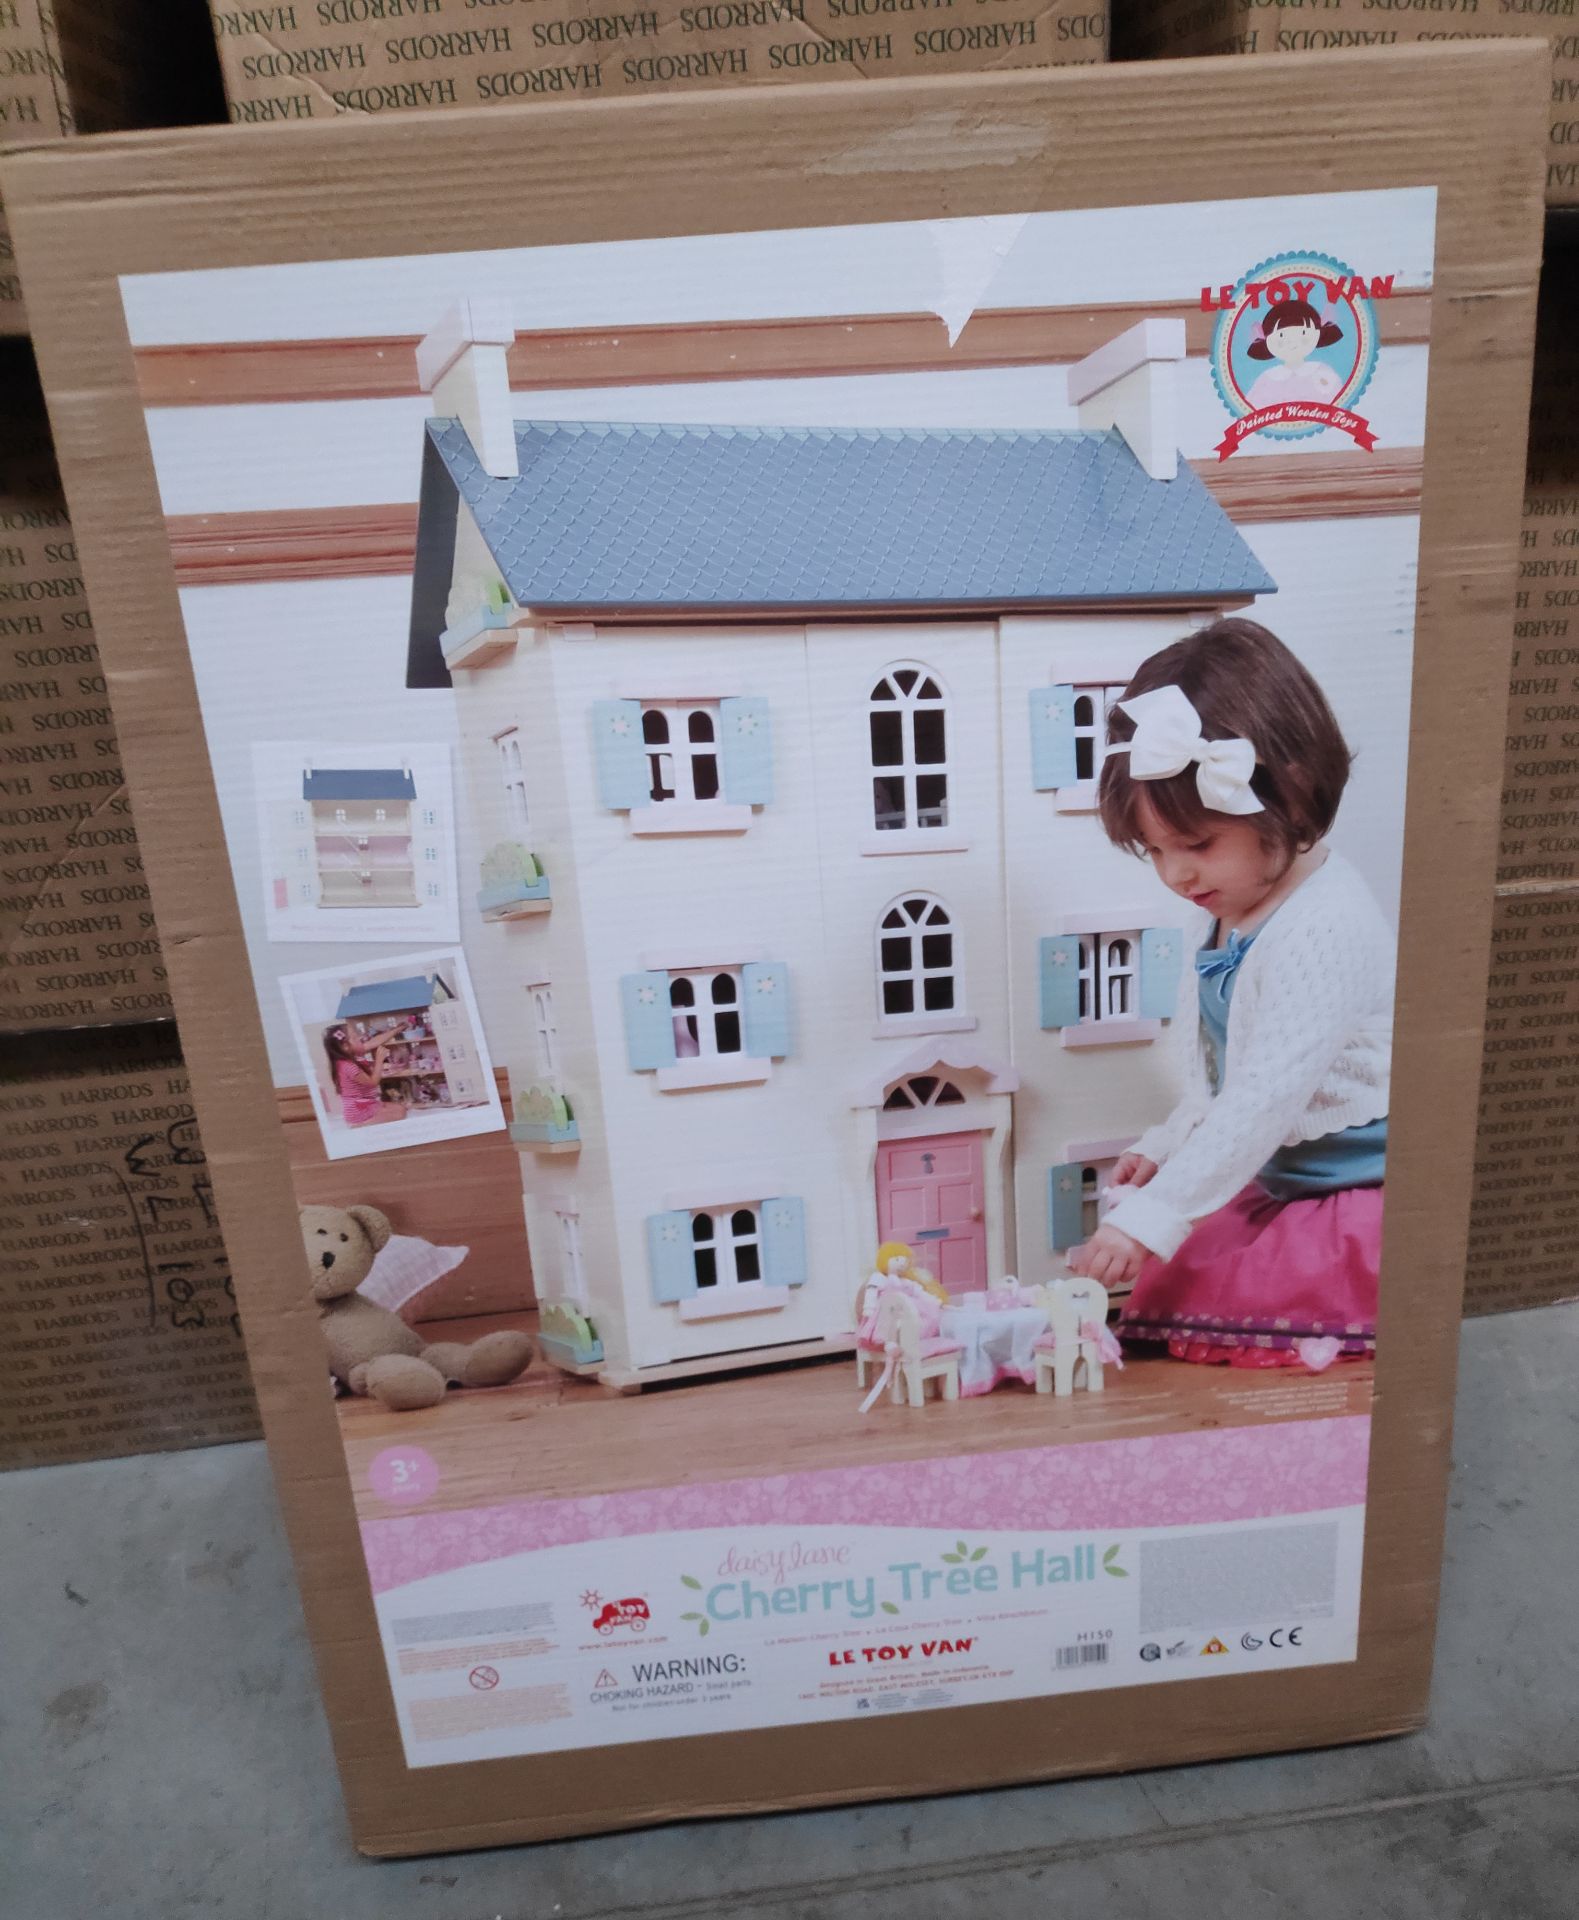 1 x Le Toy Van Daisy Lane Cherry Tree Hall Wooden Dolls House - New/Boxed